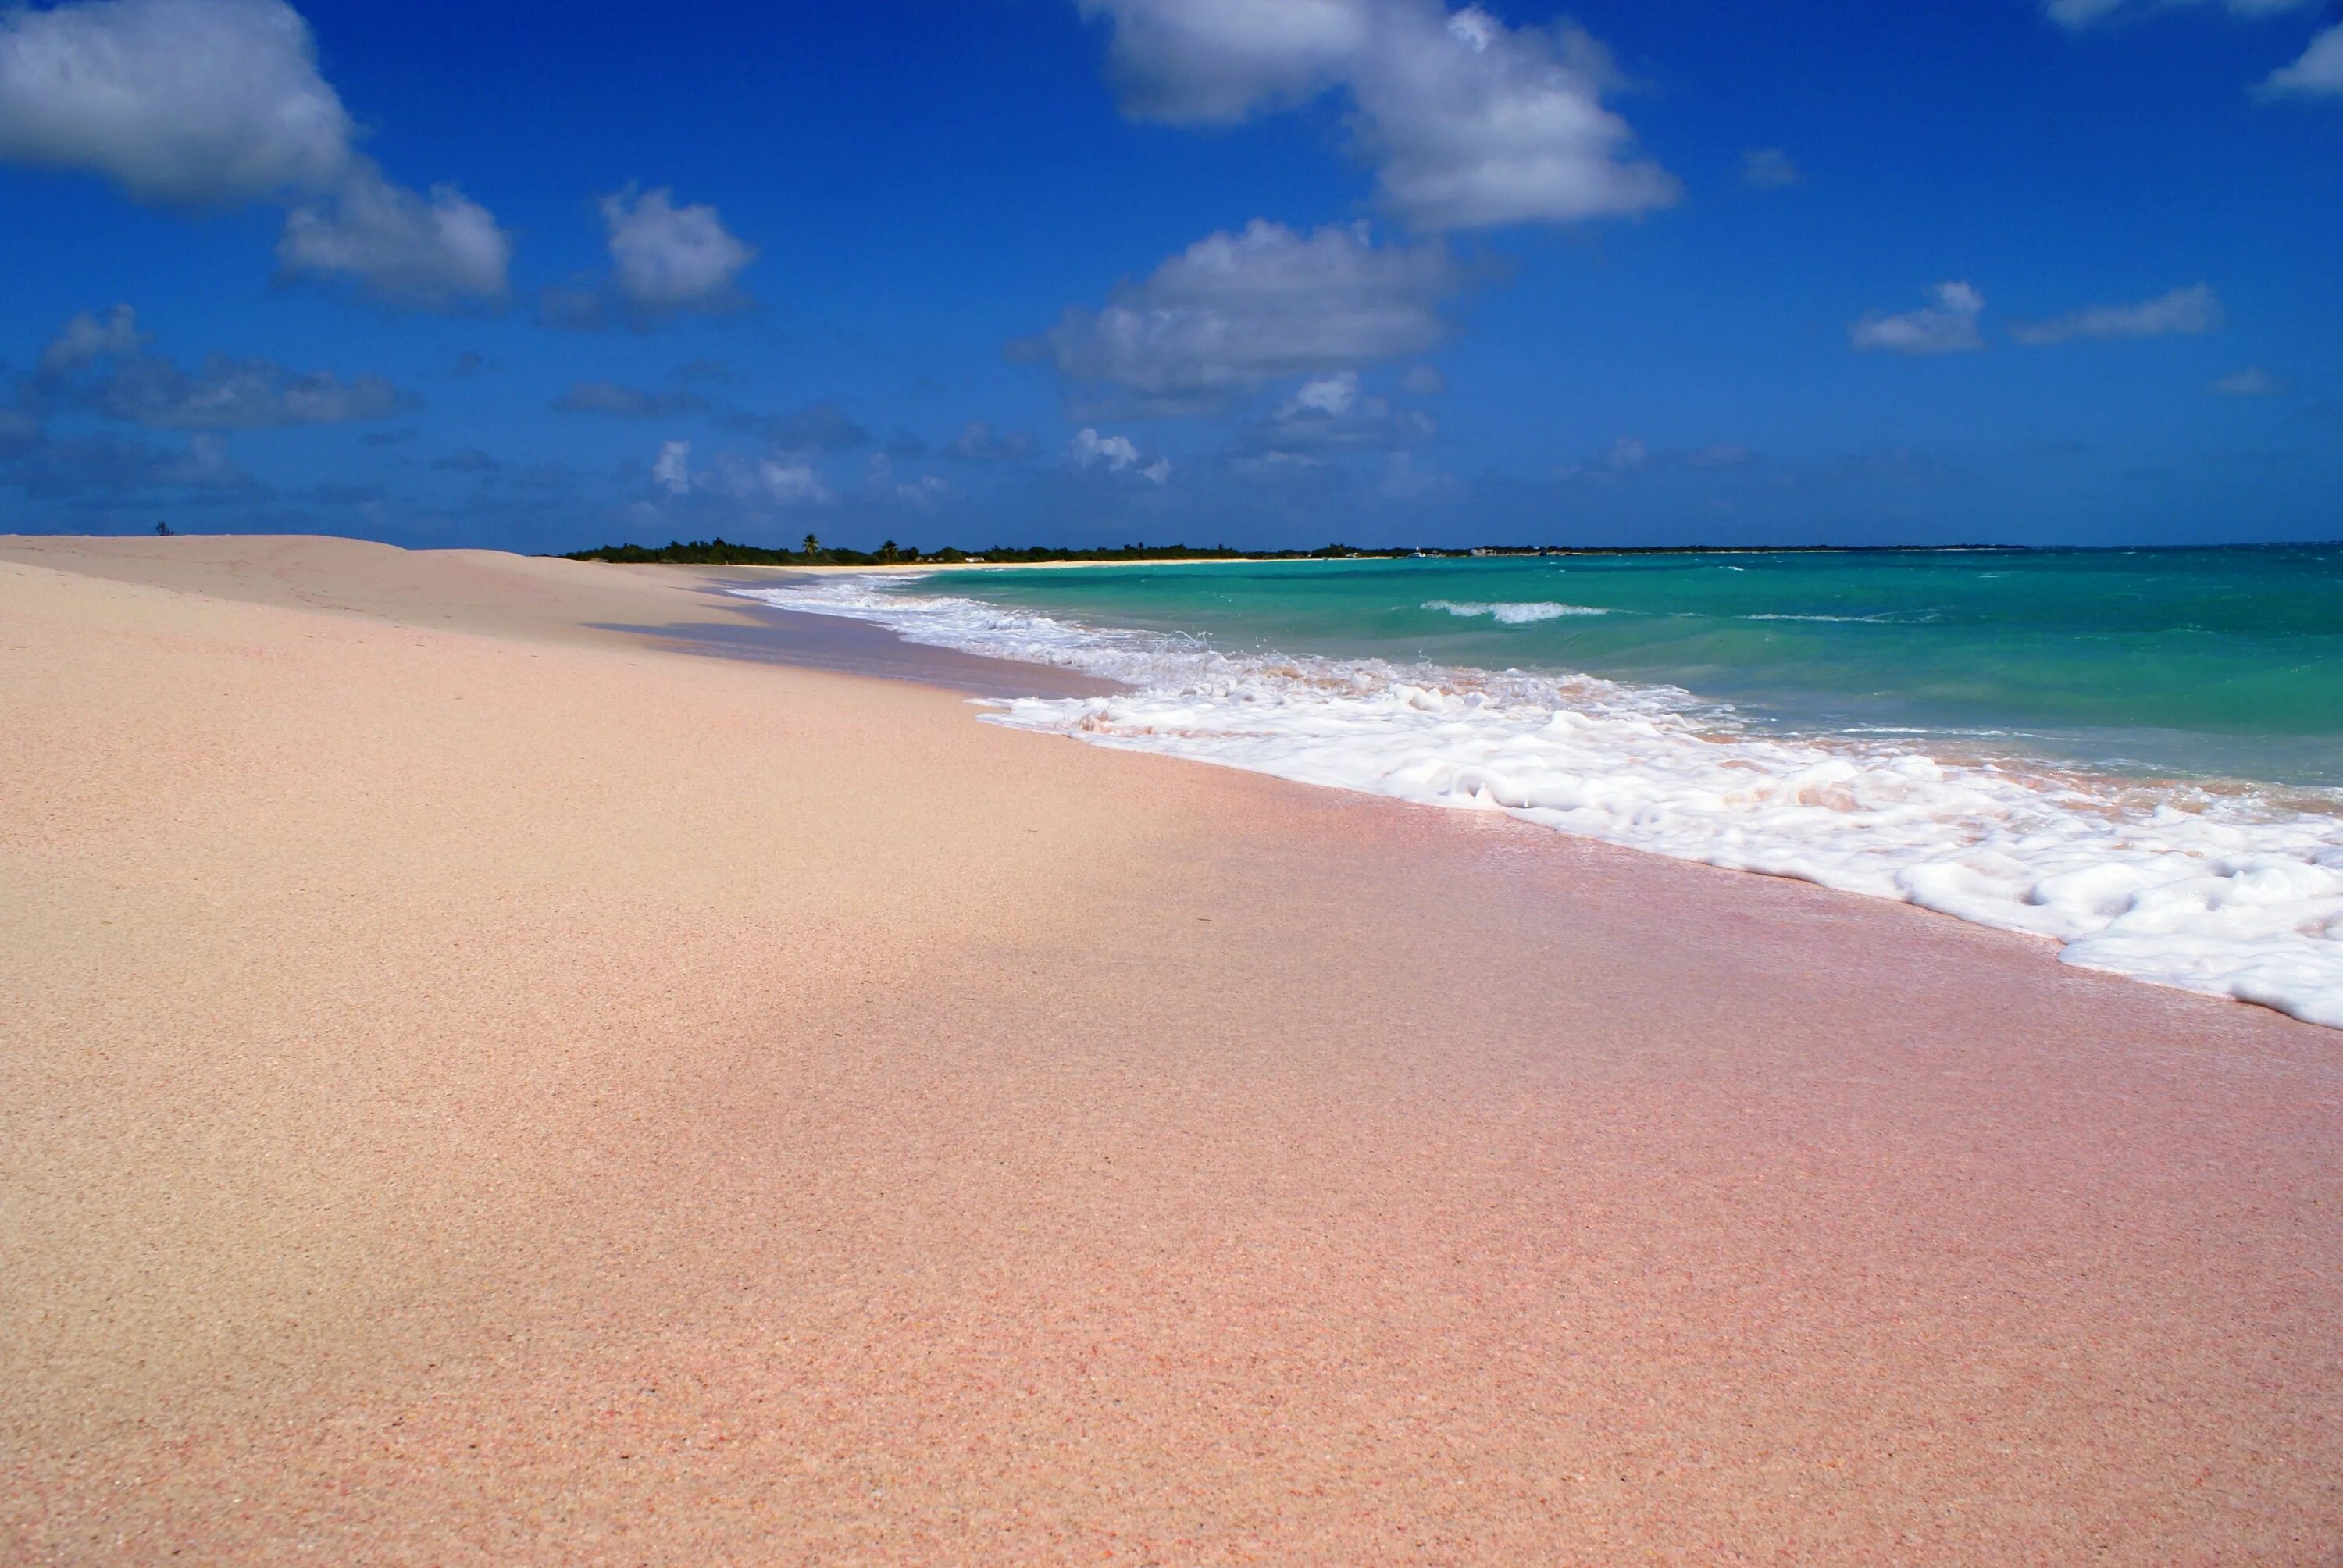 Санд Беач. Пляж. Море пляж. Песчаный пляж. Its beach beach beach